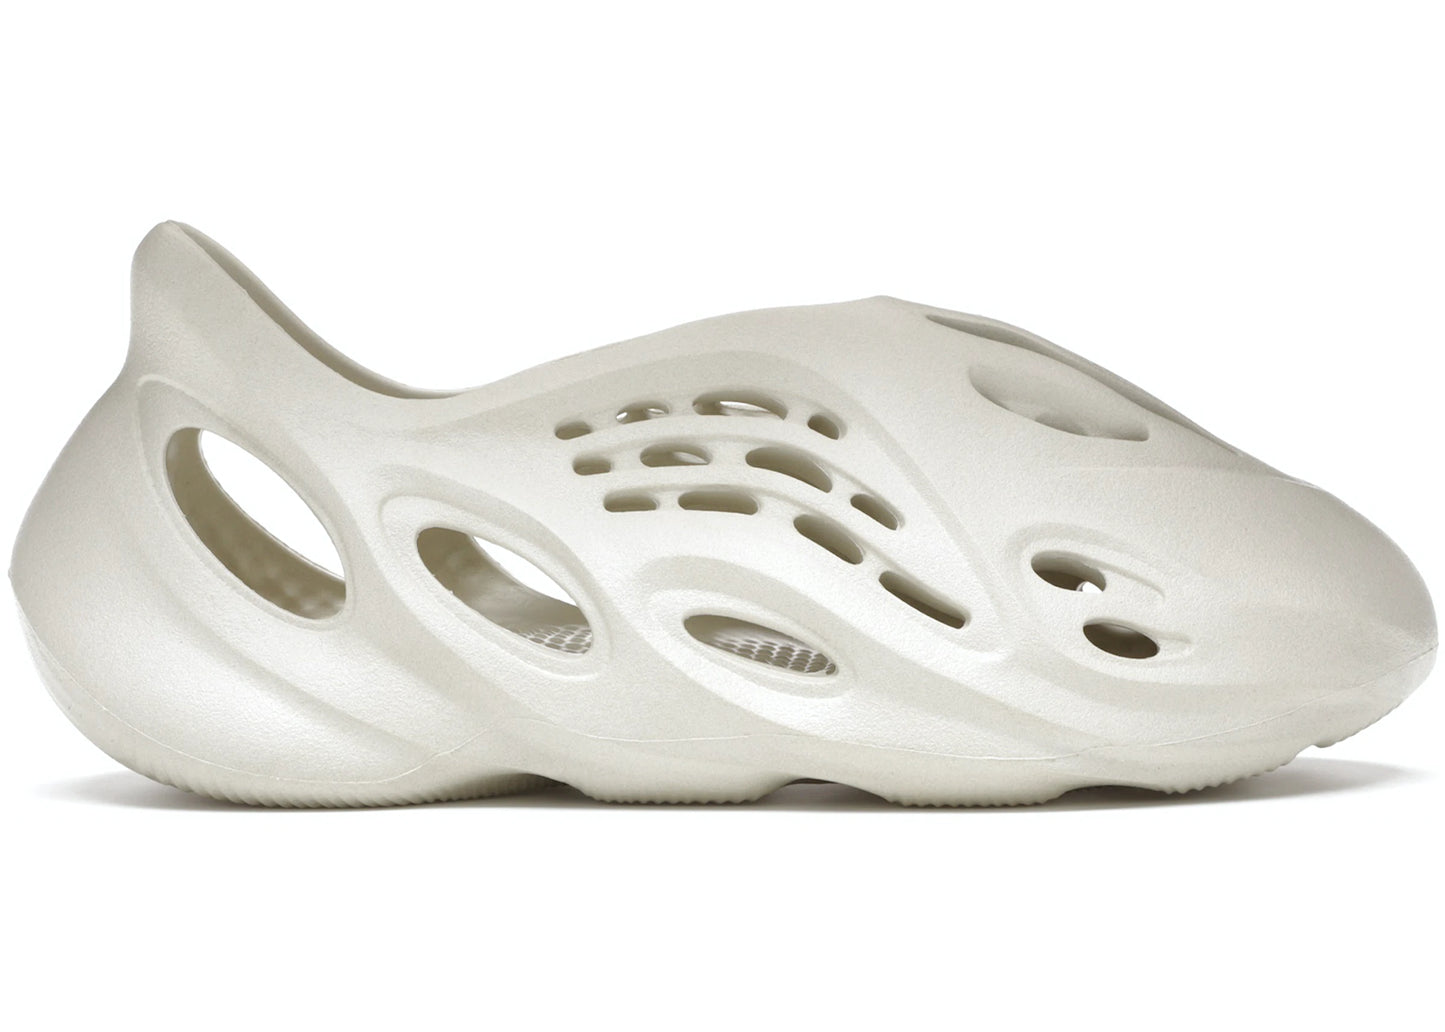 adidas Yeezy Foam Runner Sand